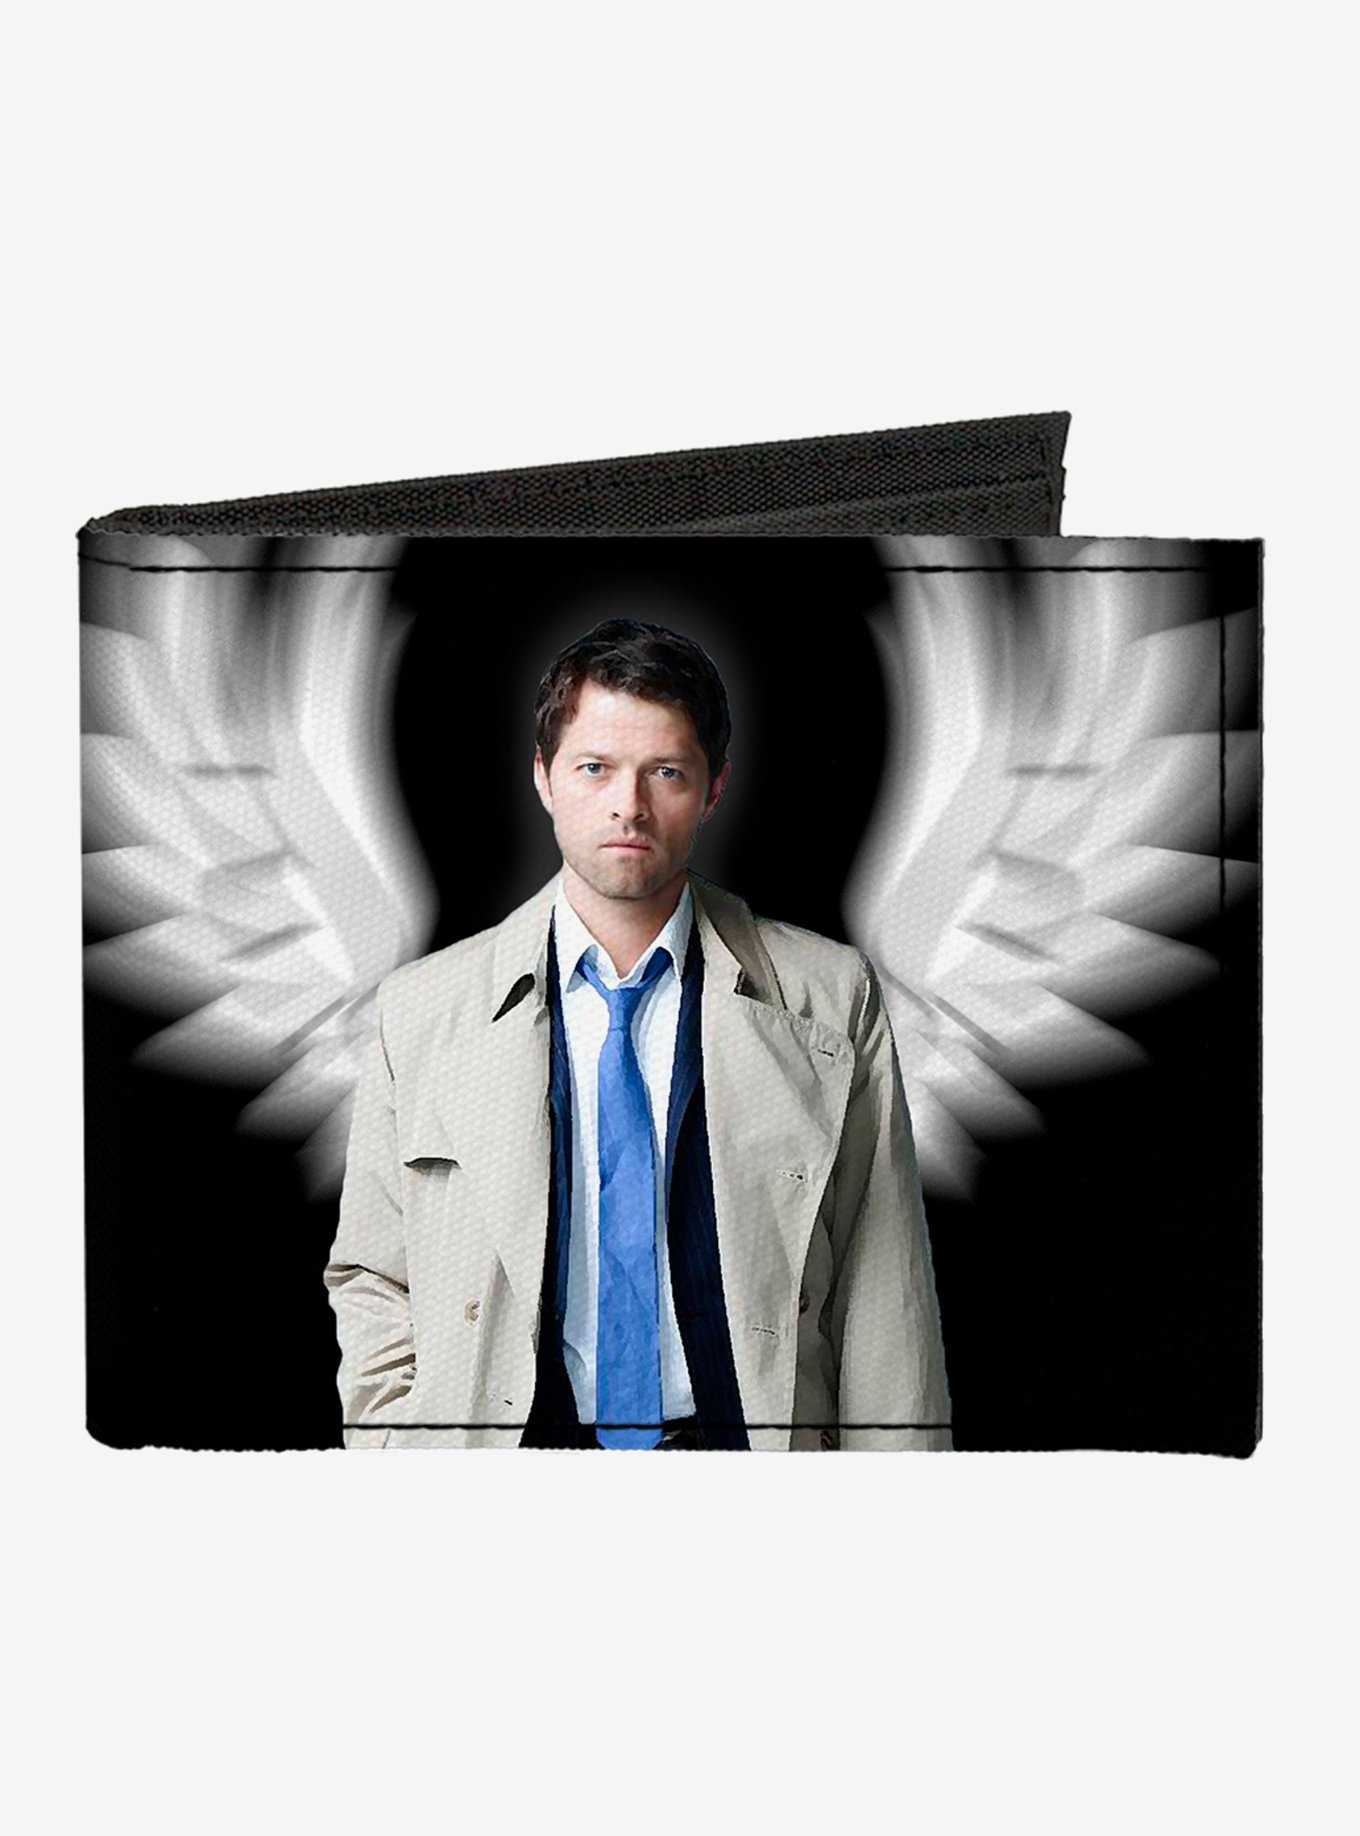 Supernatural Castiel Angel Wings Bifold Wallet, , hi-res